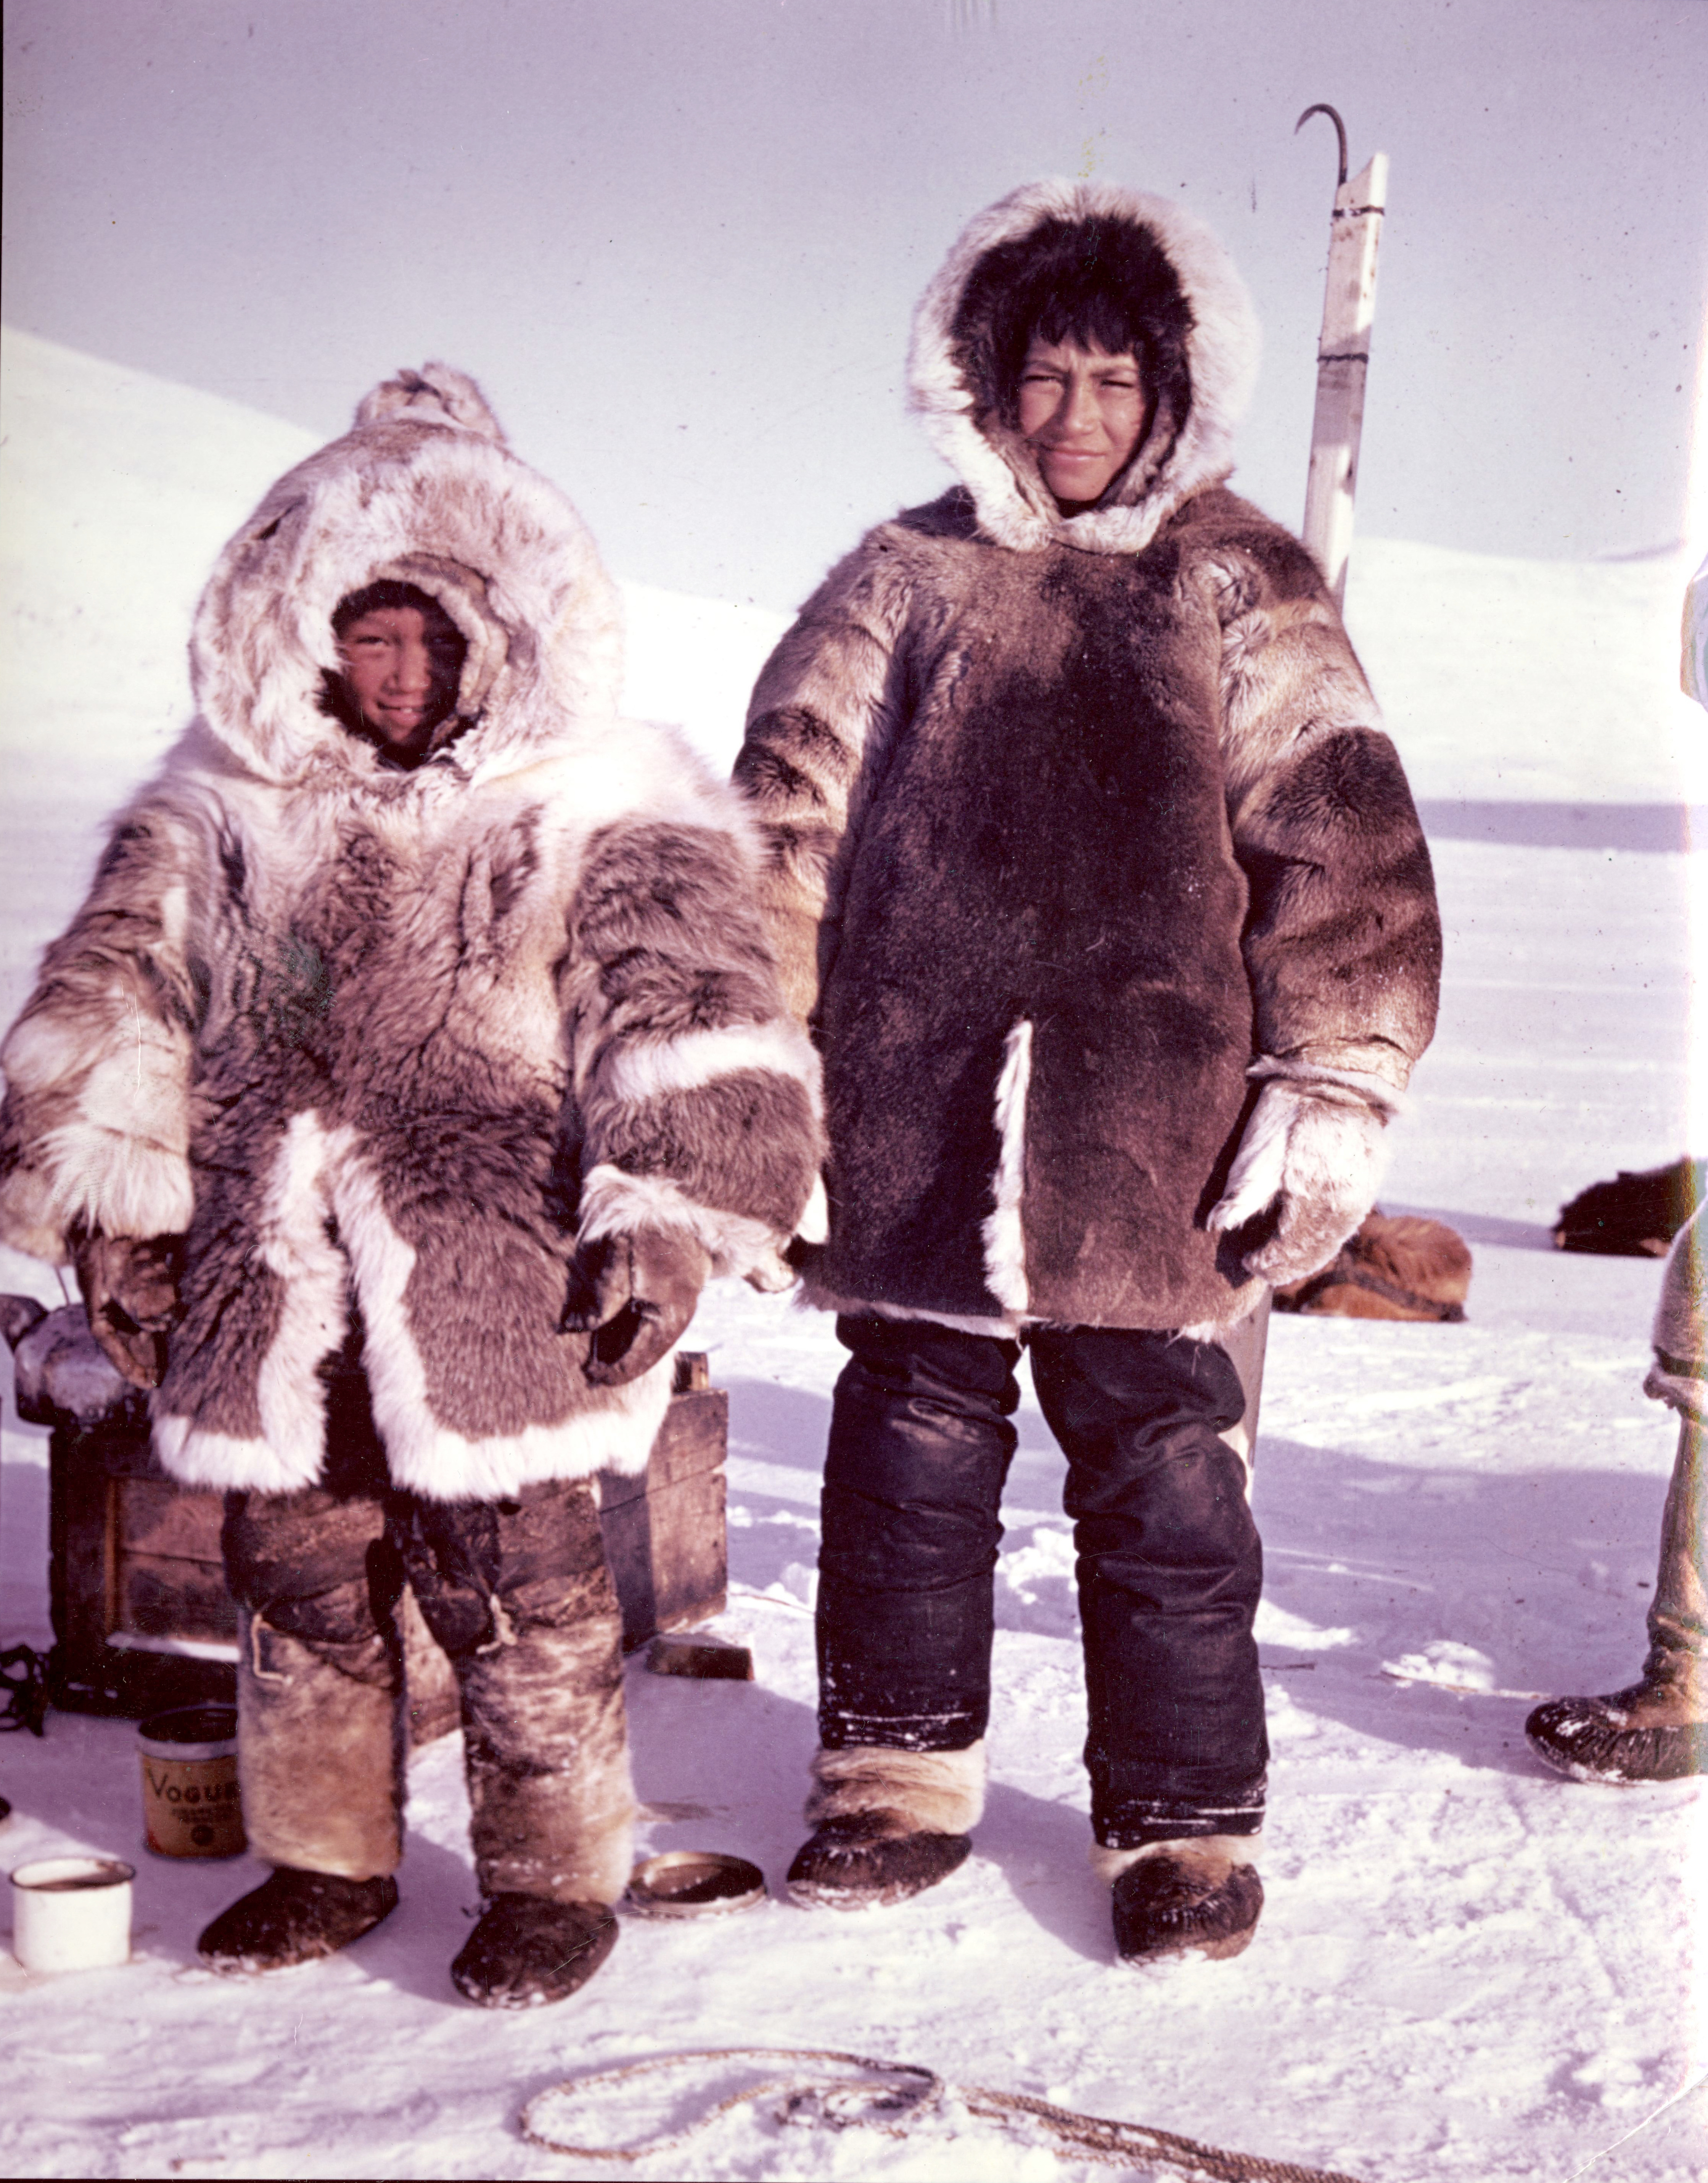 Ekalujuak’s son (left) with Kabloonaq, Clyde River (Kanngiqtugaapik), Baffin Island, 1953 or 1954. //Photographed by Gabriel Gély.